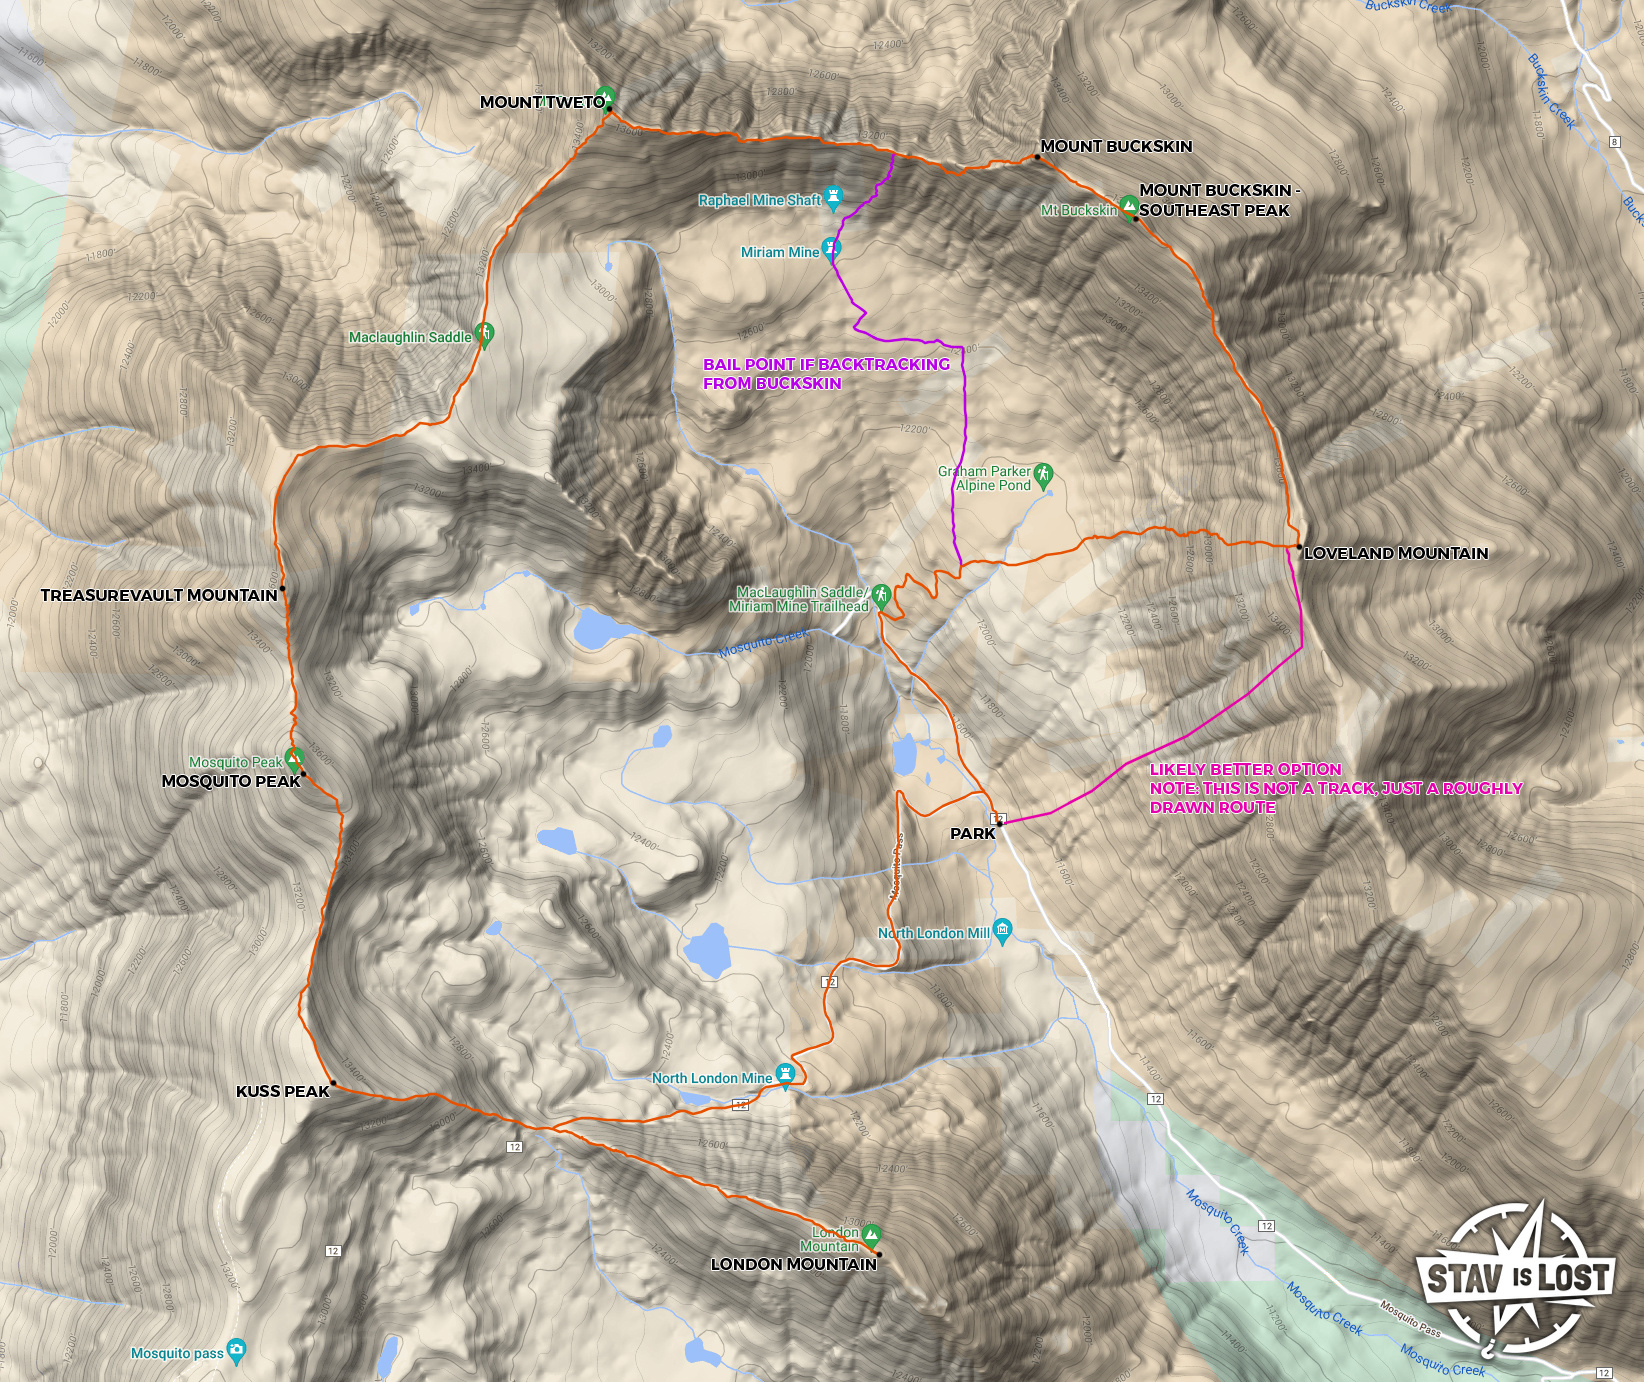 map for London Mountain, Mosquito Peak, Mount Tweto, Mount Buckskin Loop by stav is lost